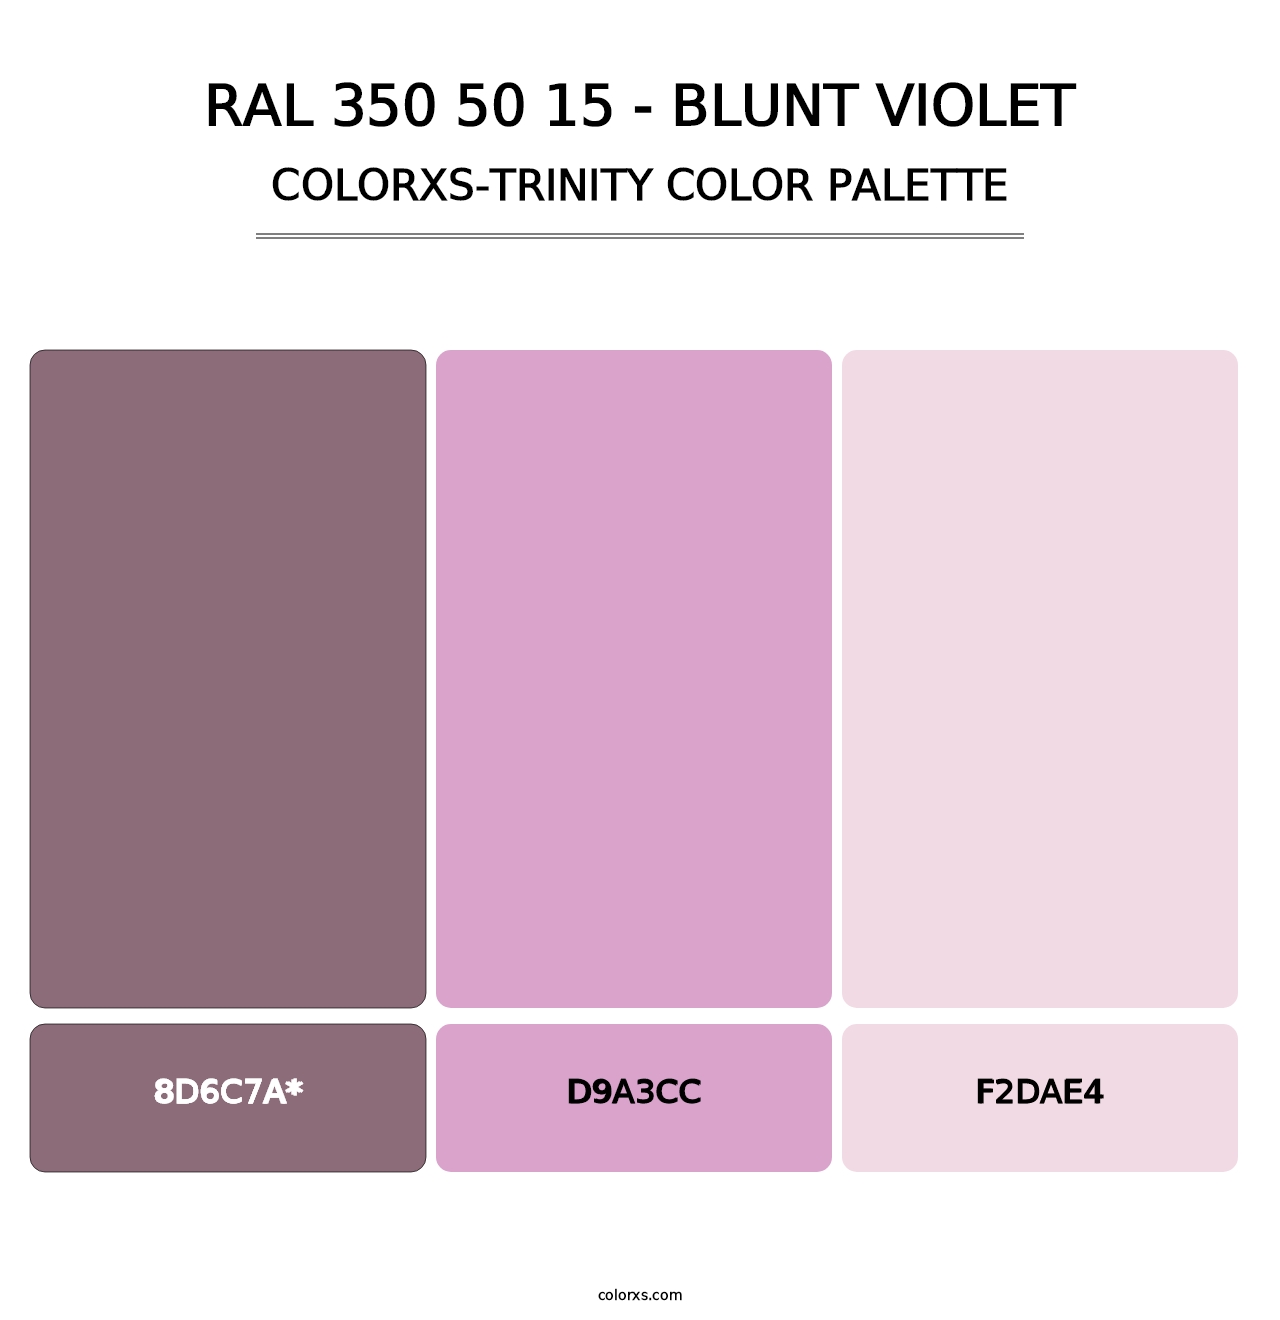 RAL 350 50 15 - Blunt Violet - Colorxs Trinity Palette